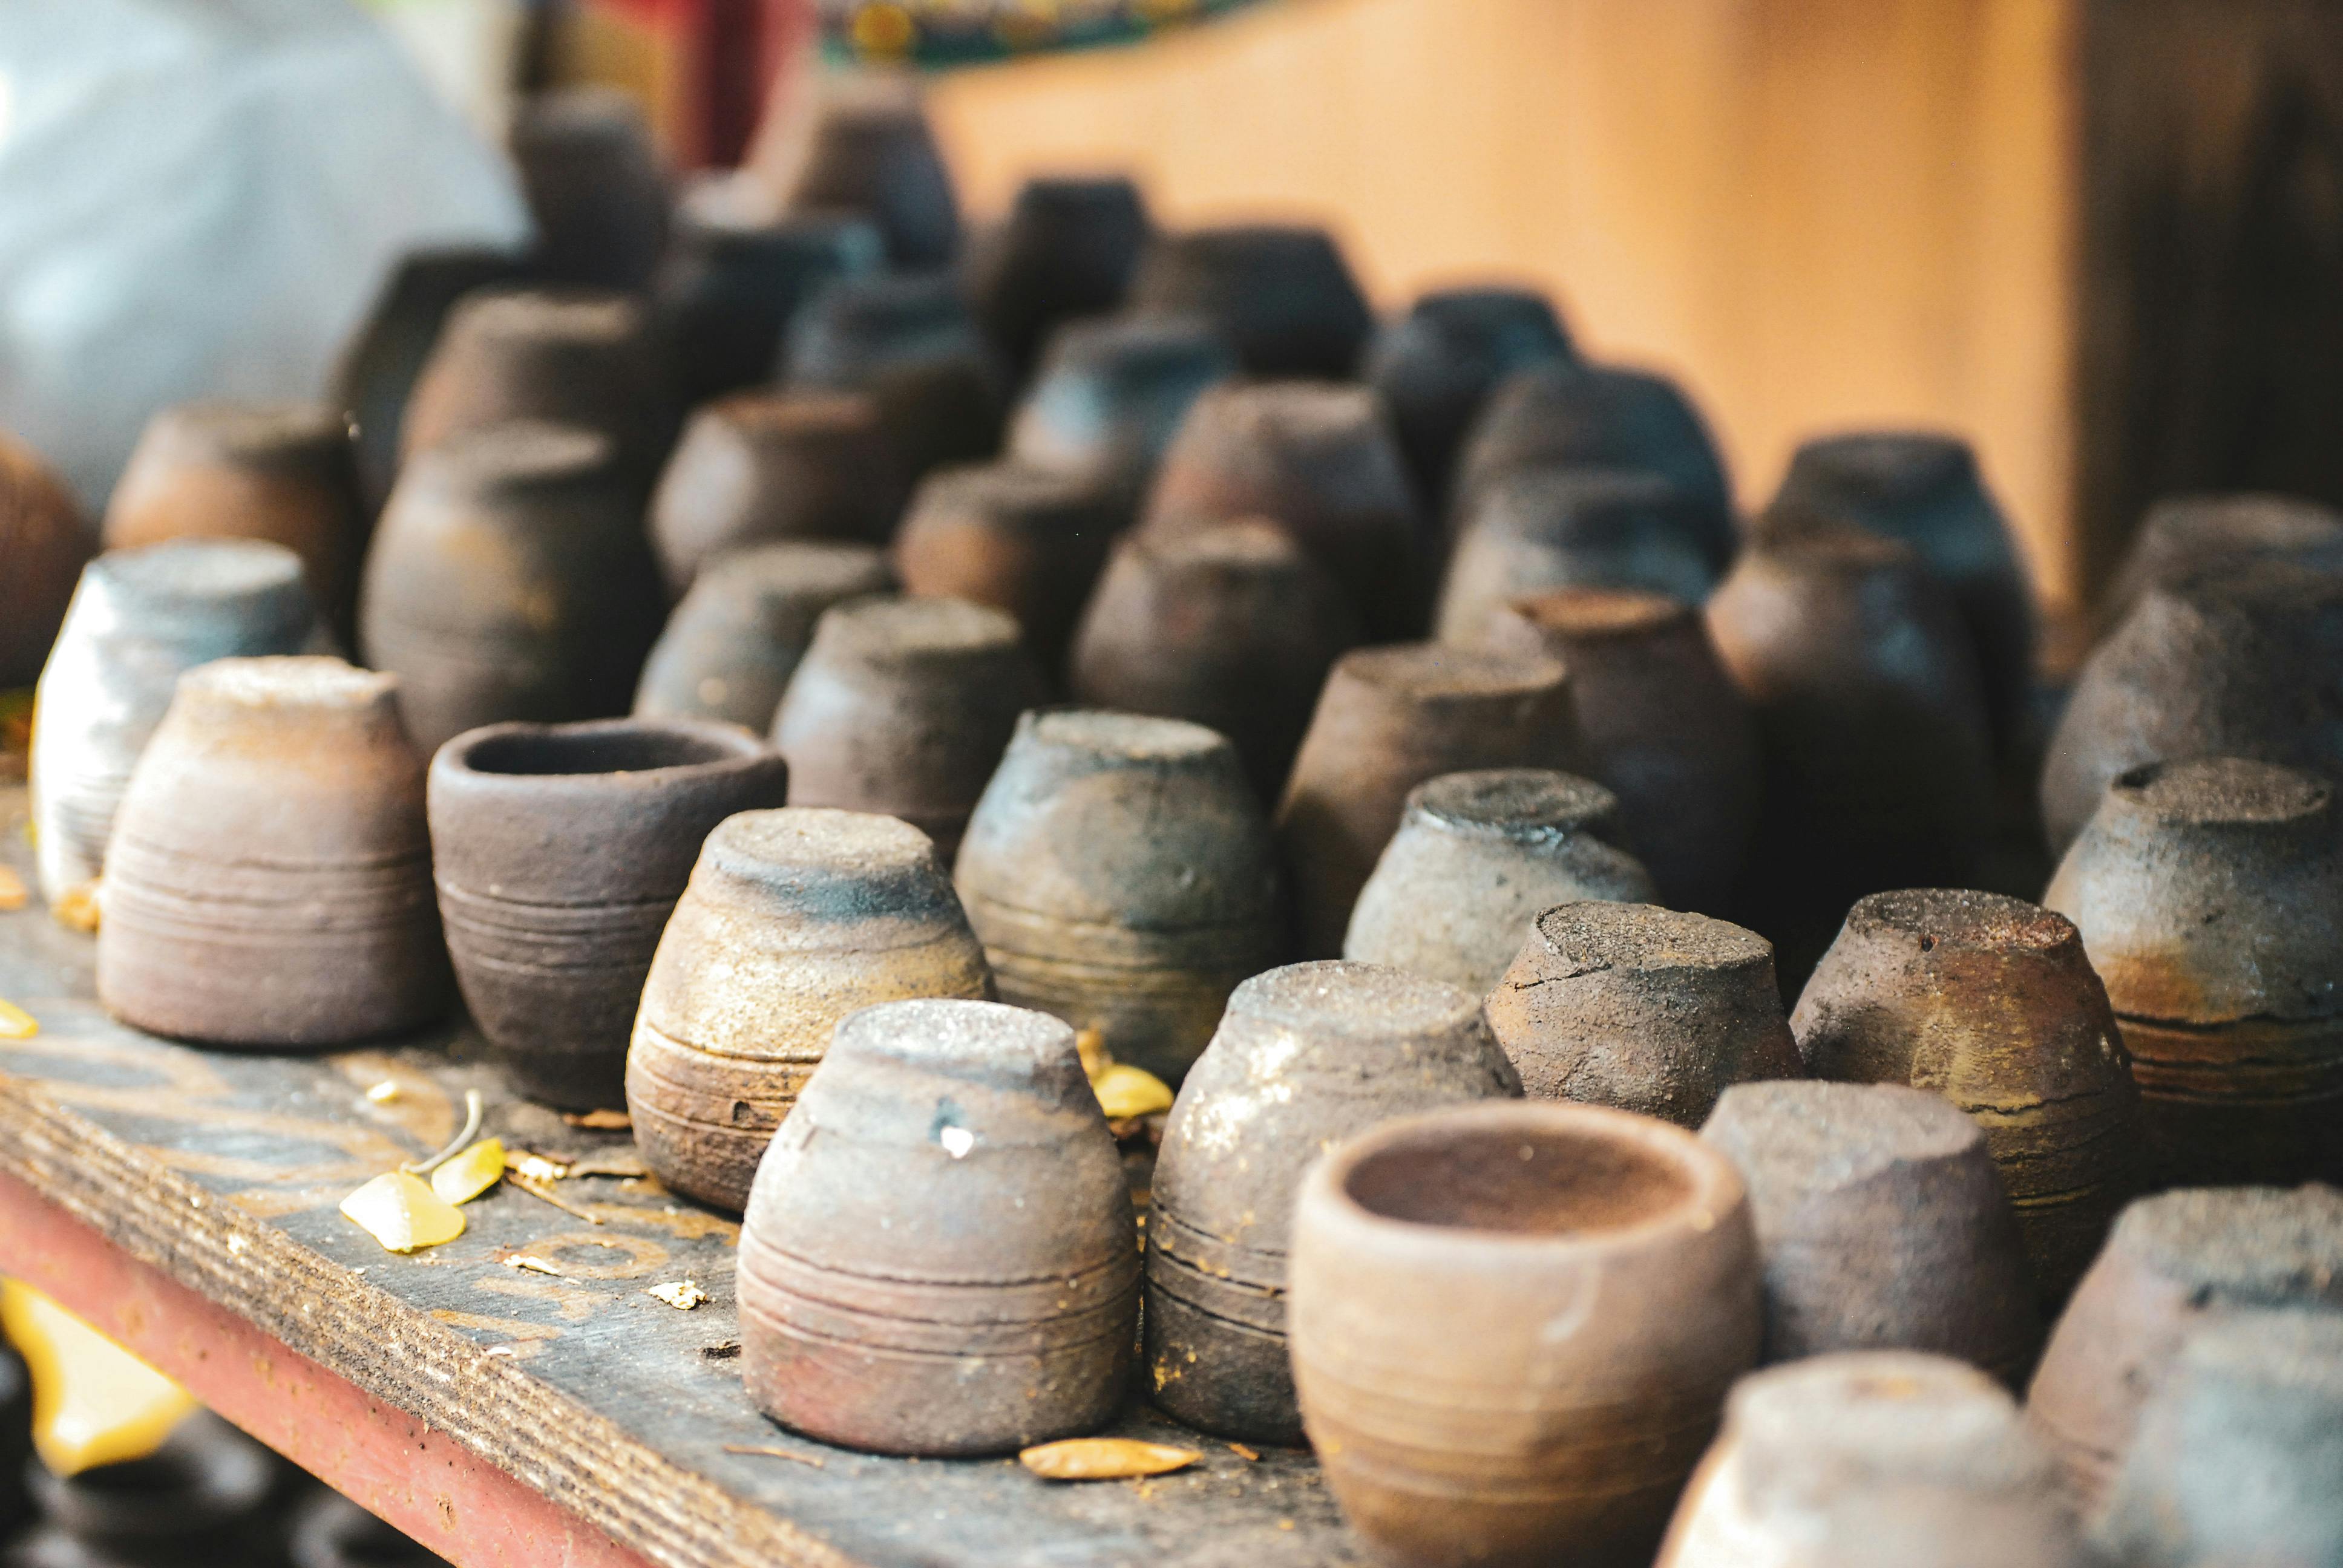 Stock of jars in Pagburnayan Jar Factory in Ilocos